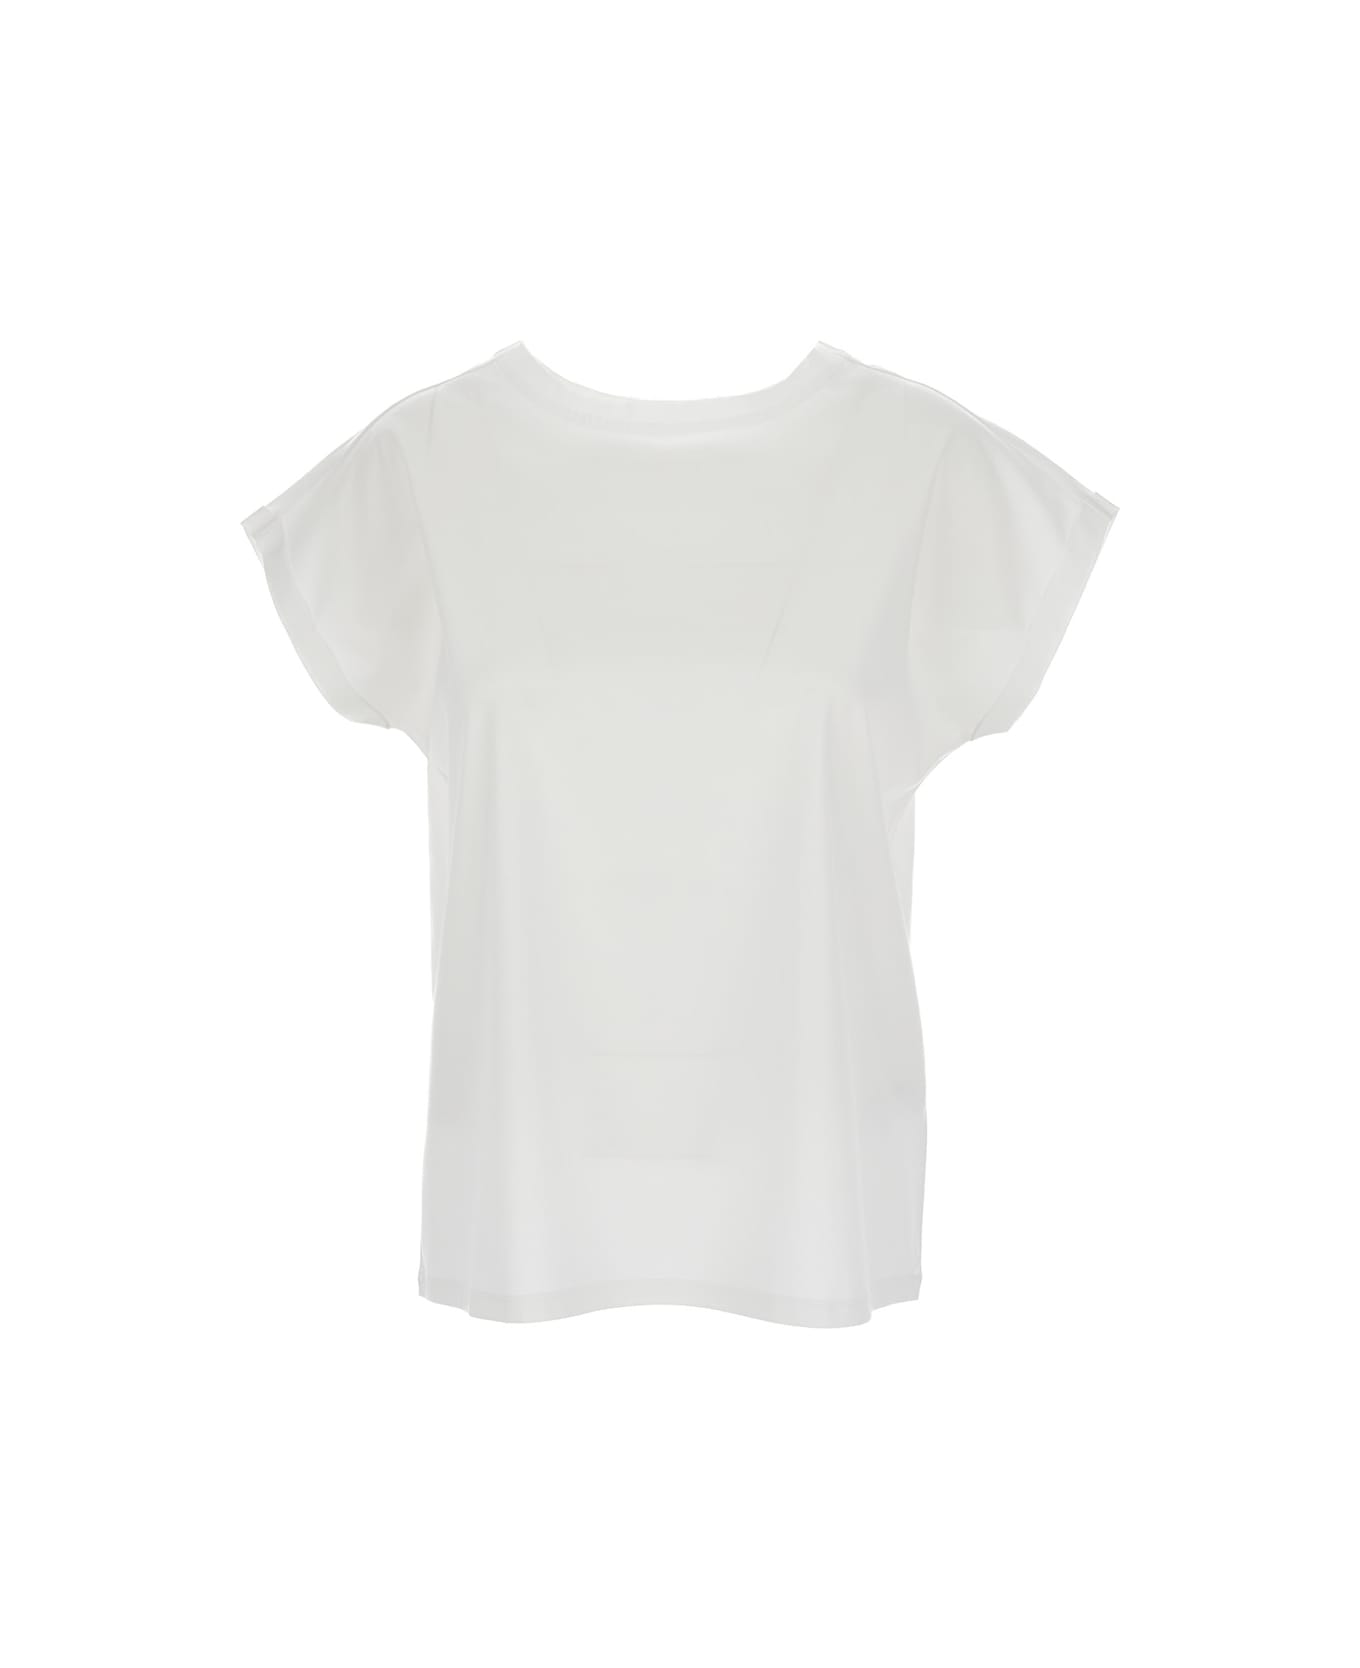 Allude White T-shirtr With U Neckline In Cotton Woman - White